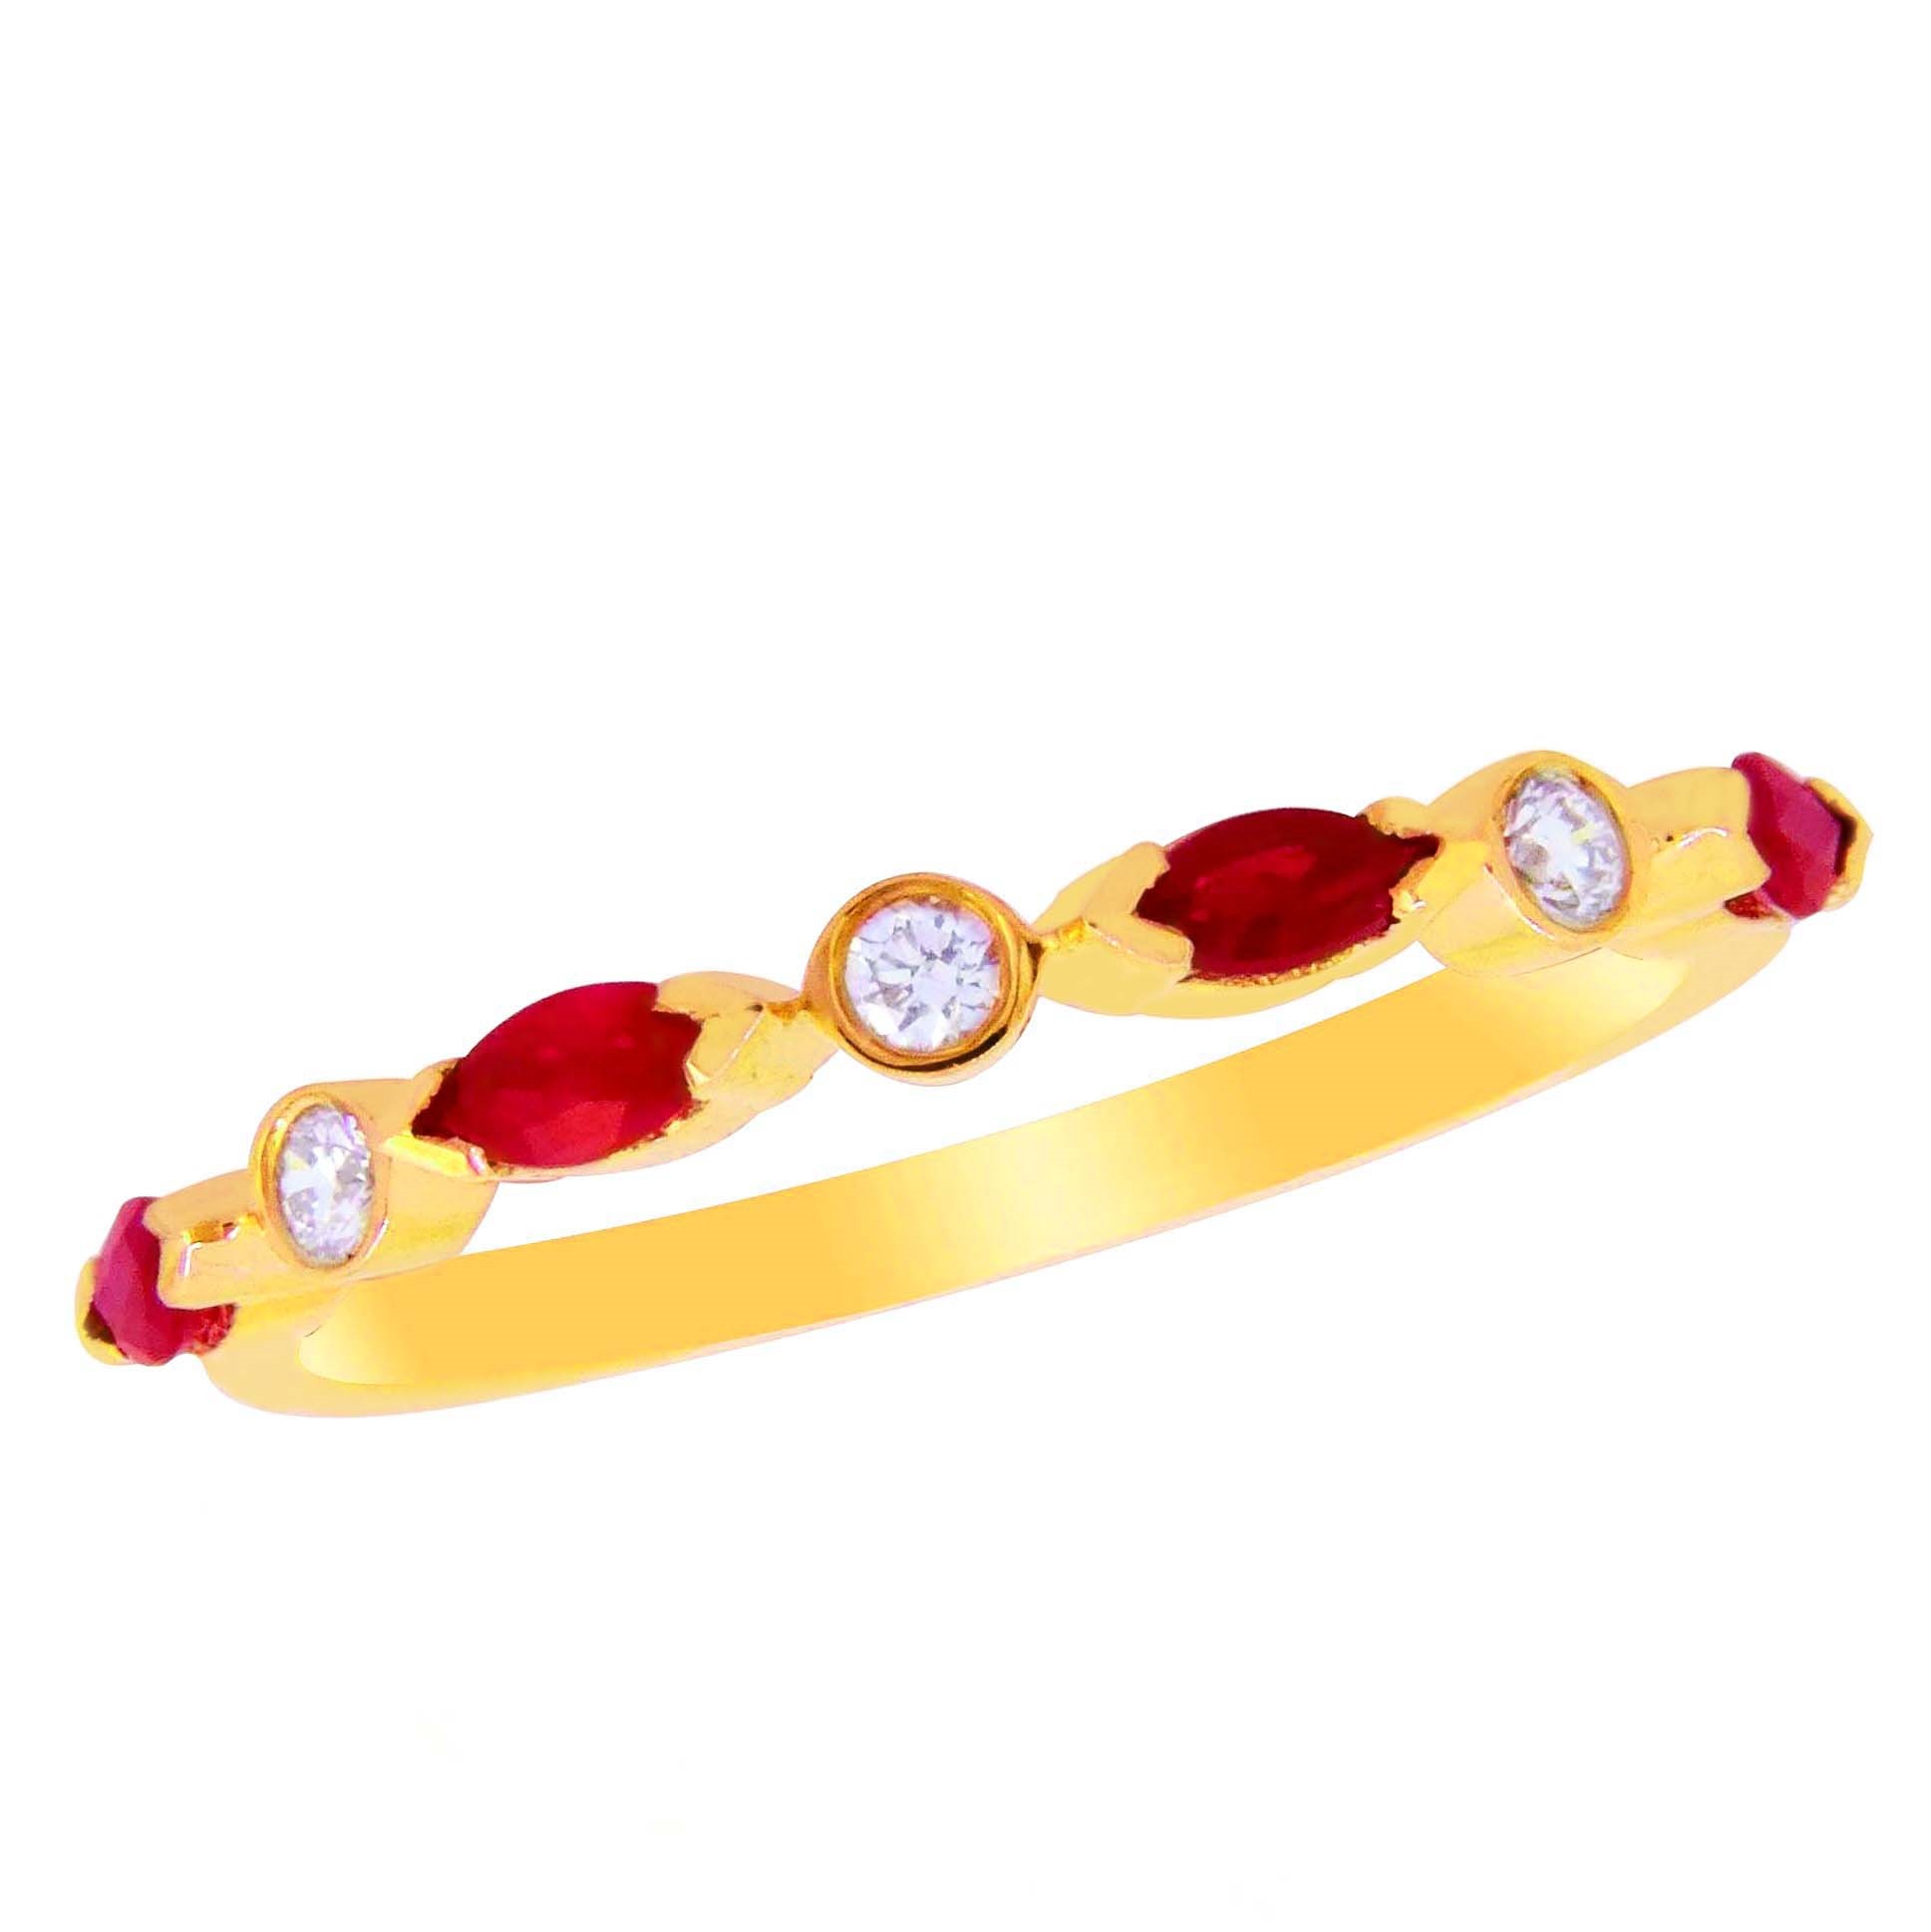 Lali 14 karat yellow gold diamond and ruby ring